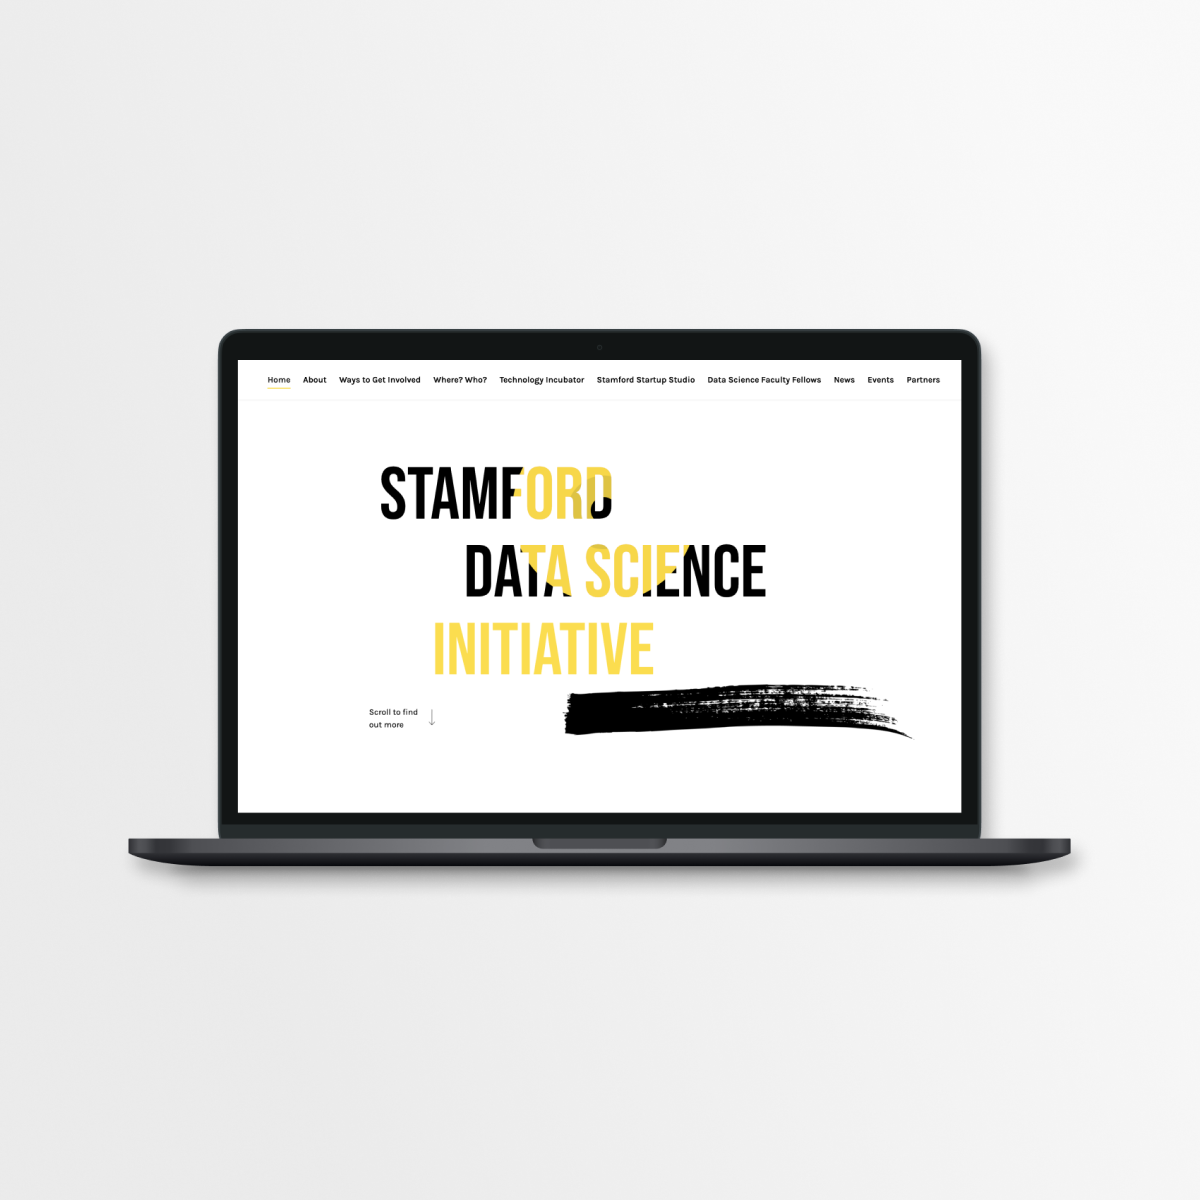 stamford data science initiative website header on computer